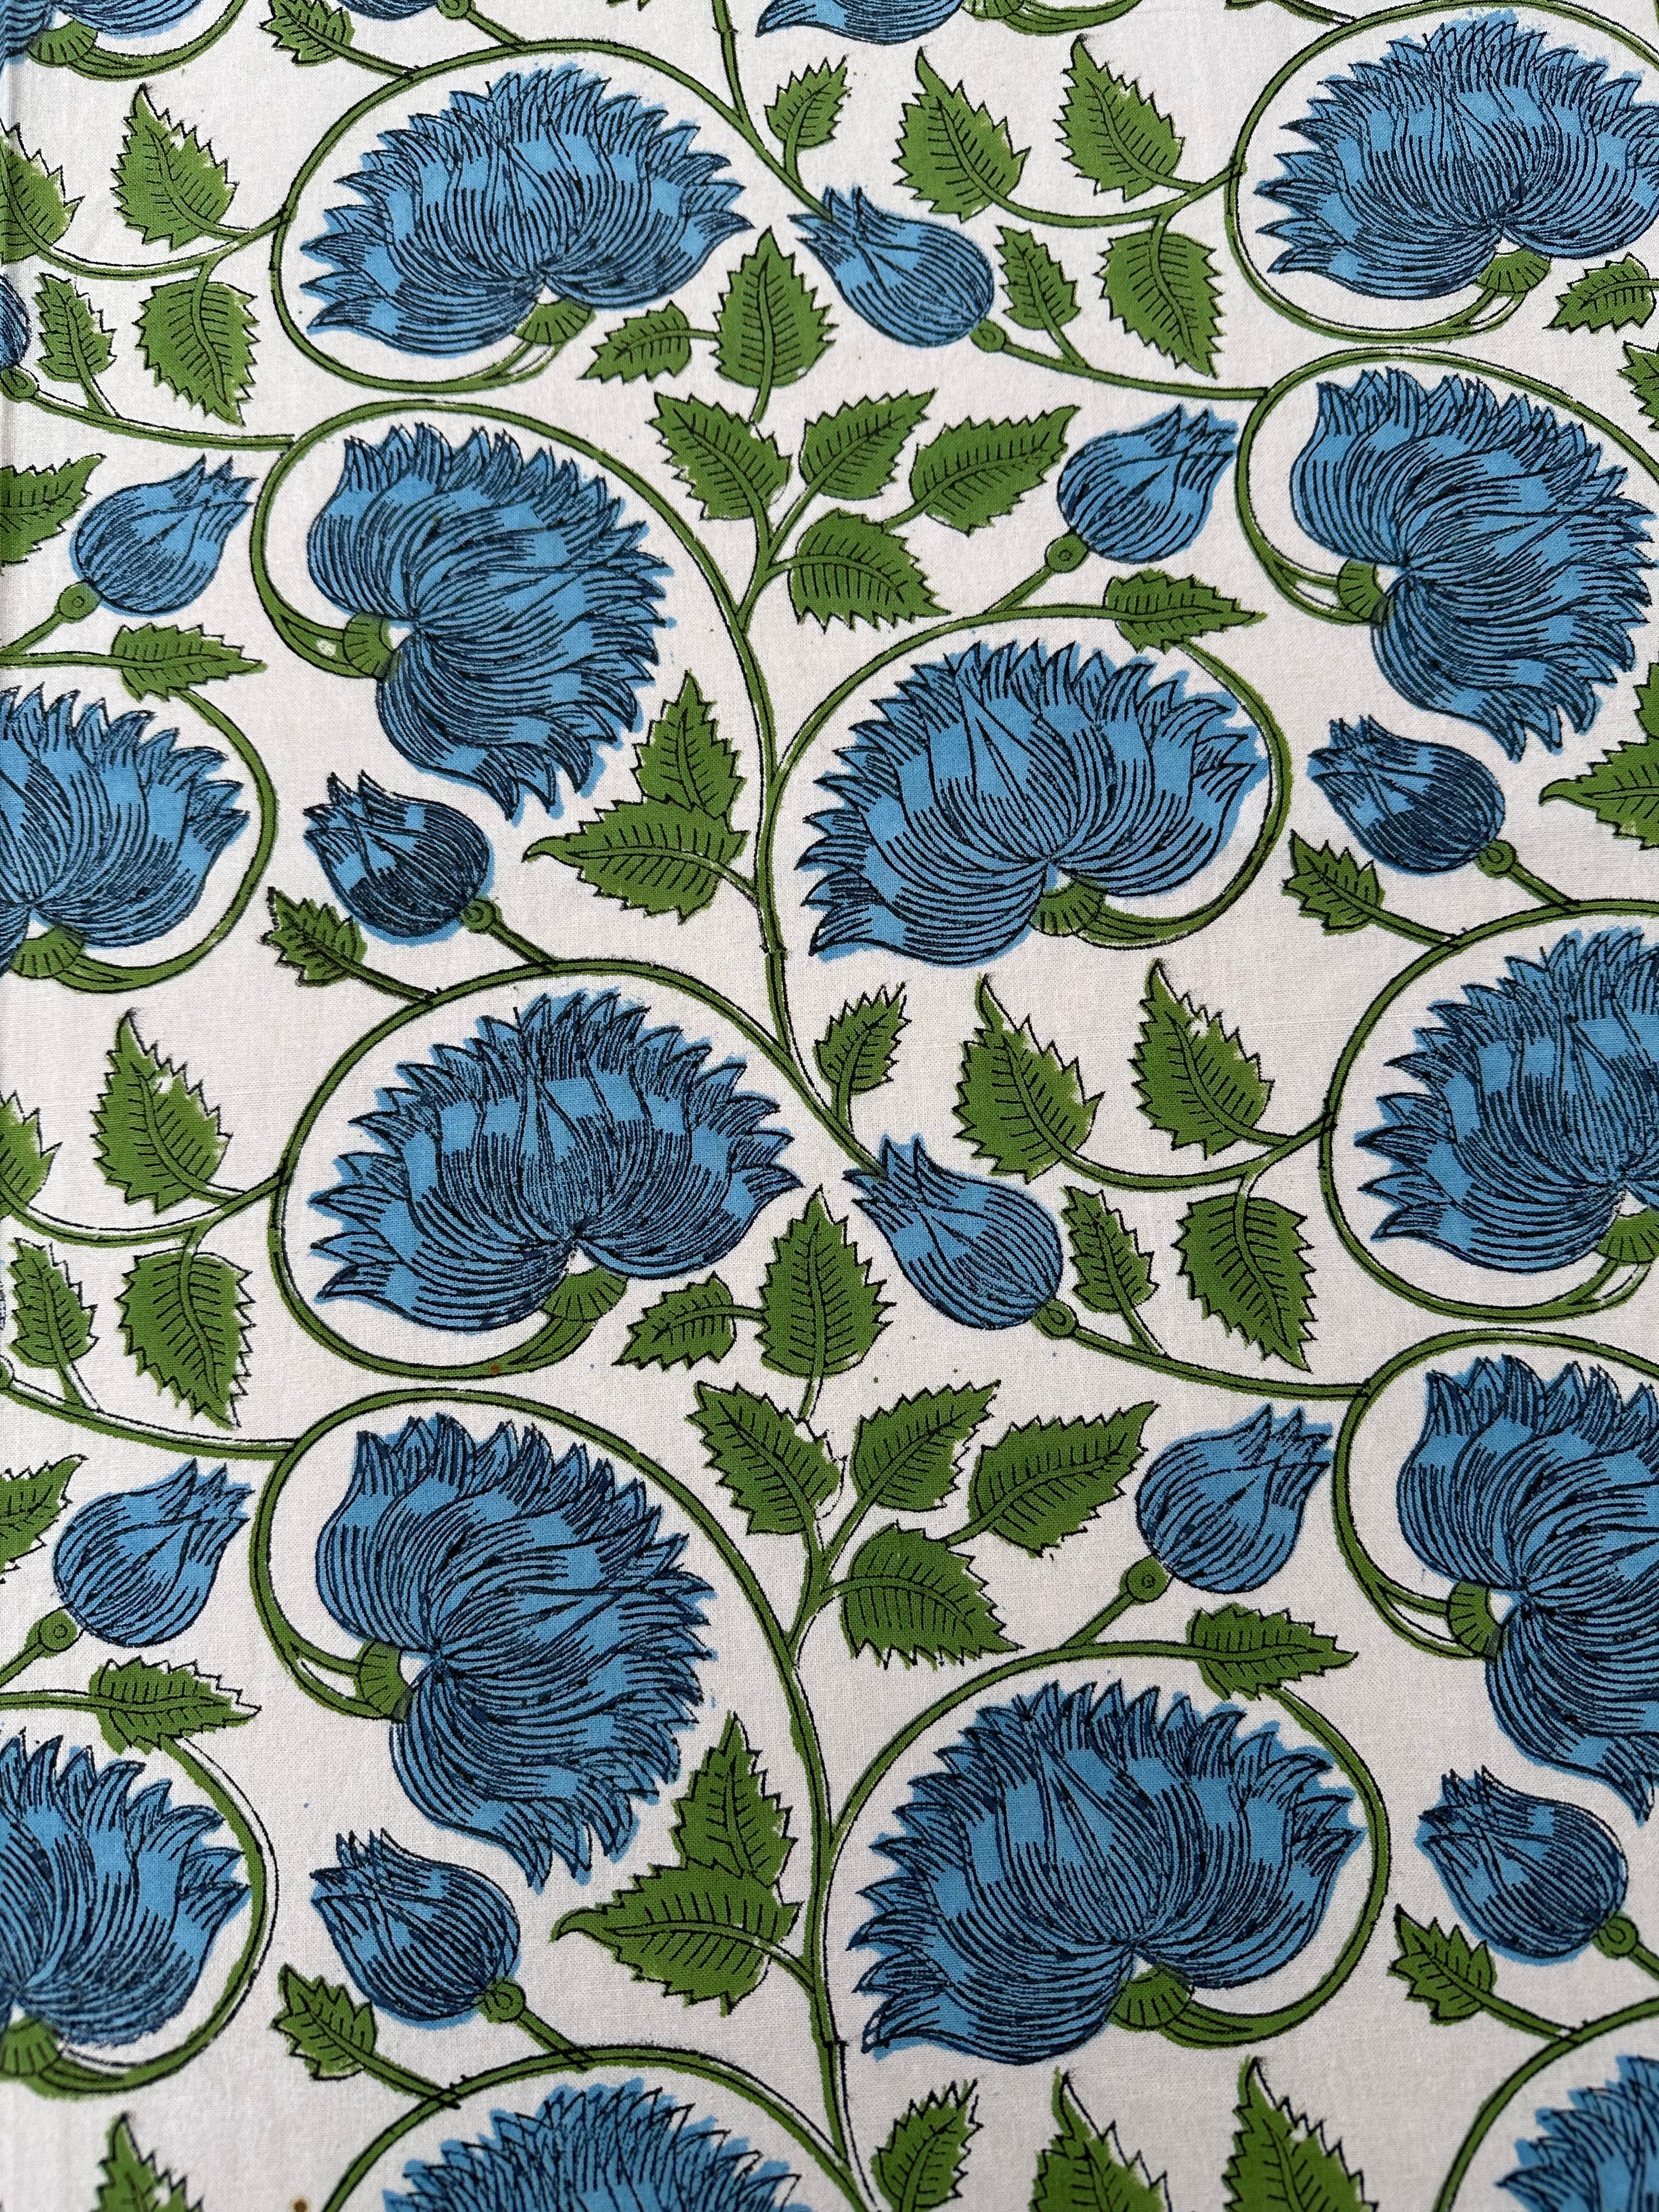 Blue and Leaf Tuscany Tablecloth